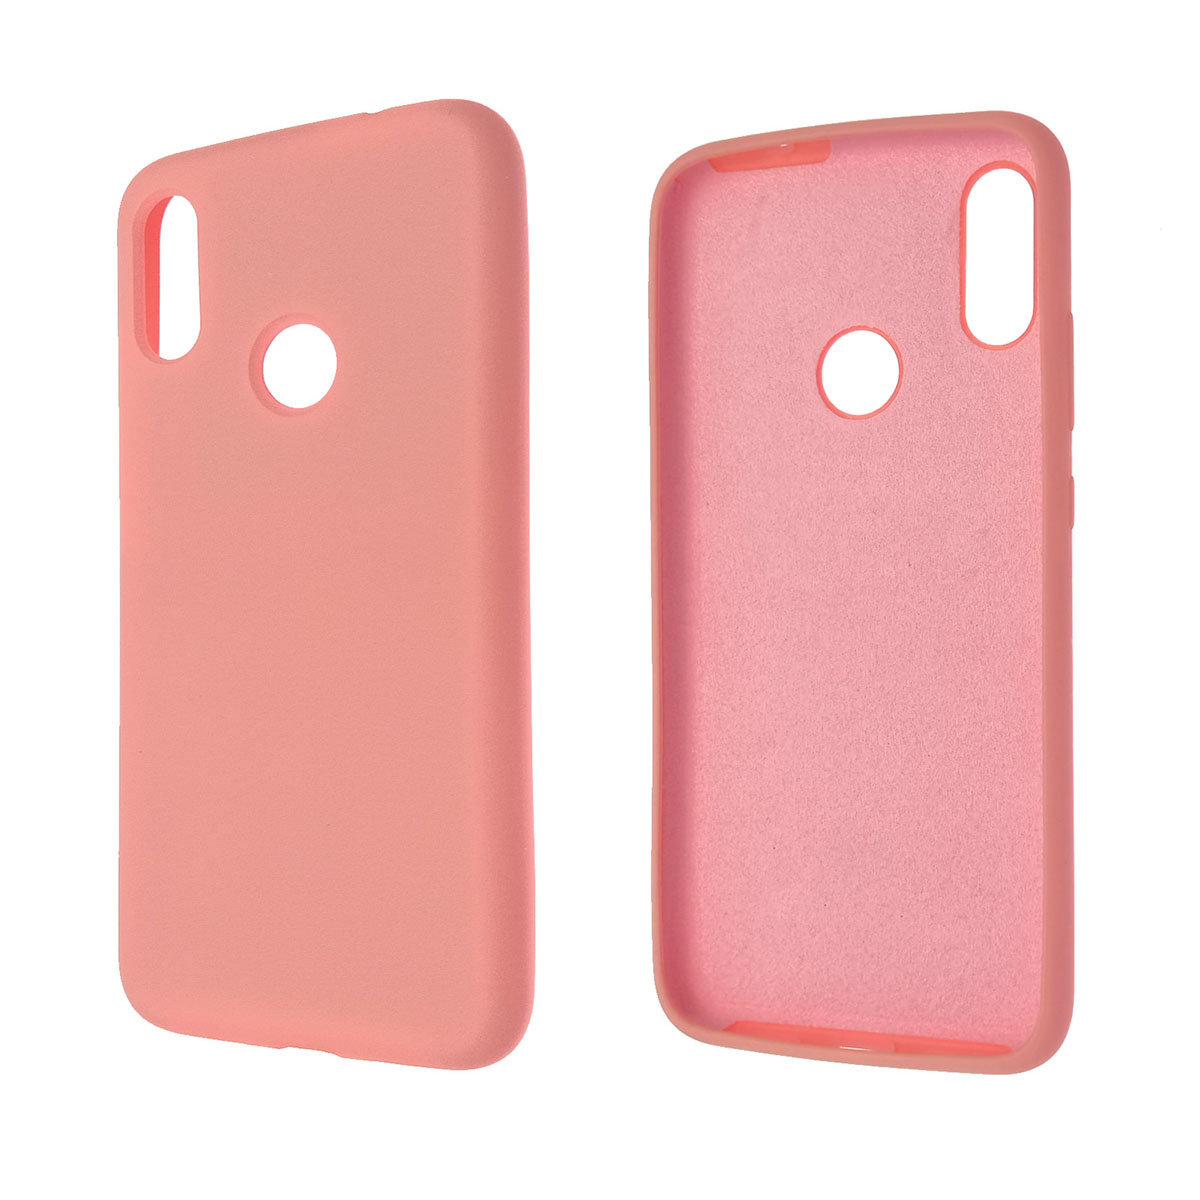 Чехол накладка Silicon Cover для XIAOMI Redmi Note 7, силикон, бархат, цвет светло розовый.